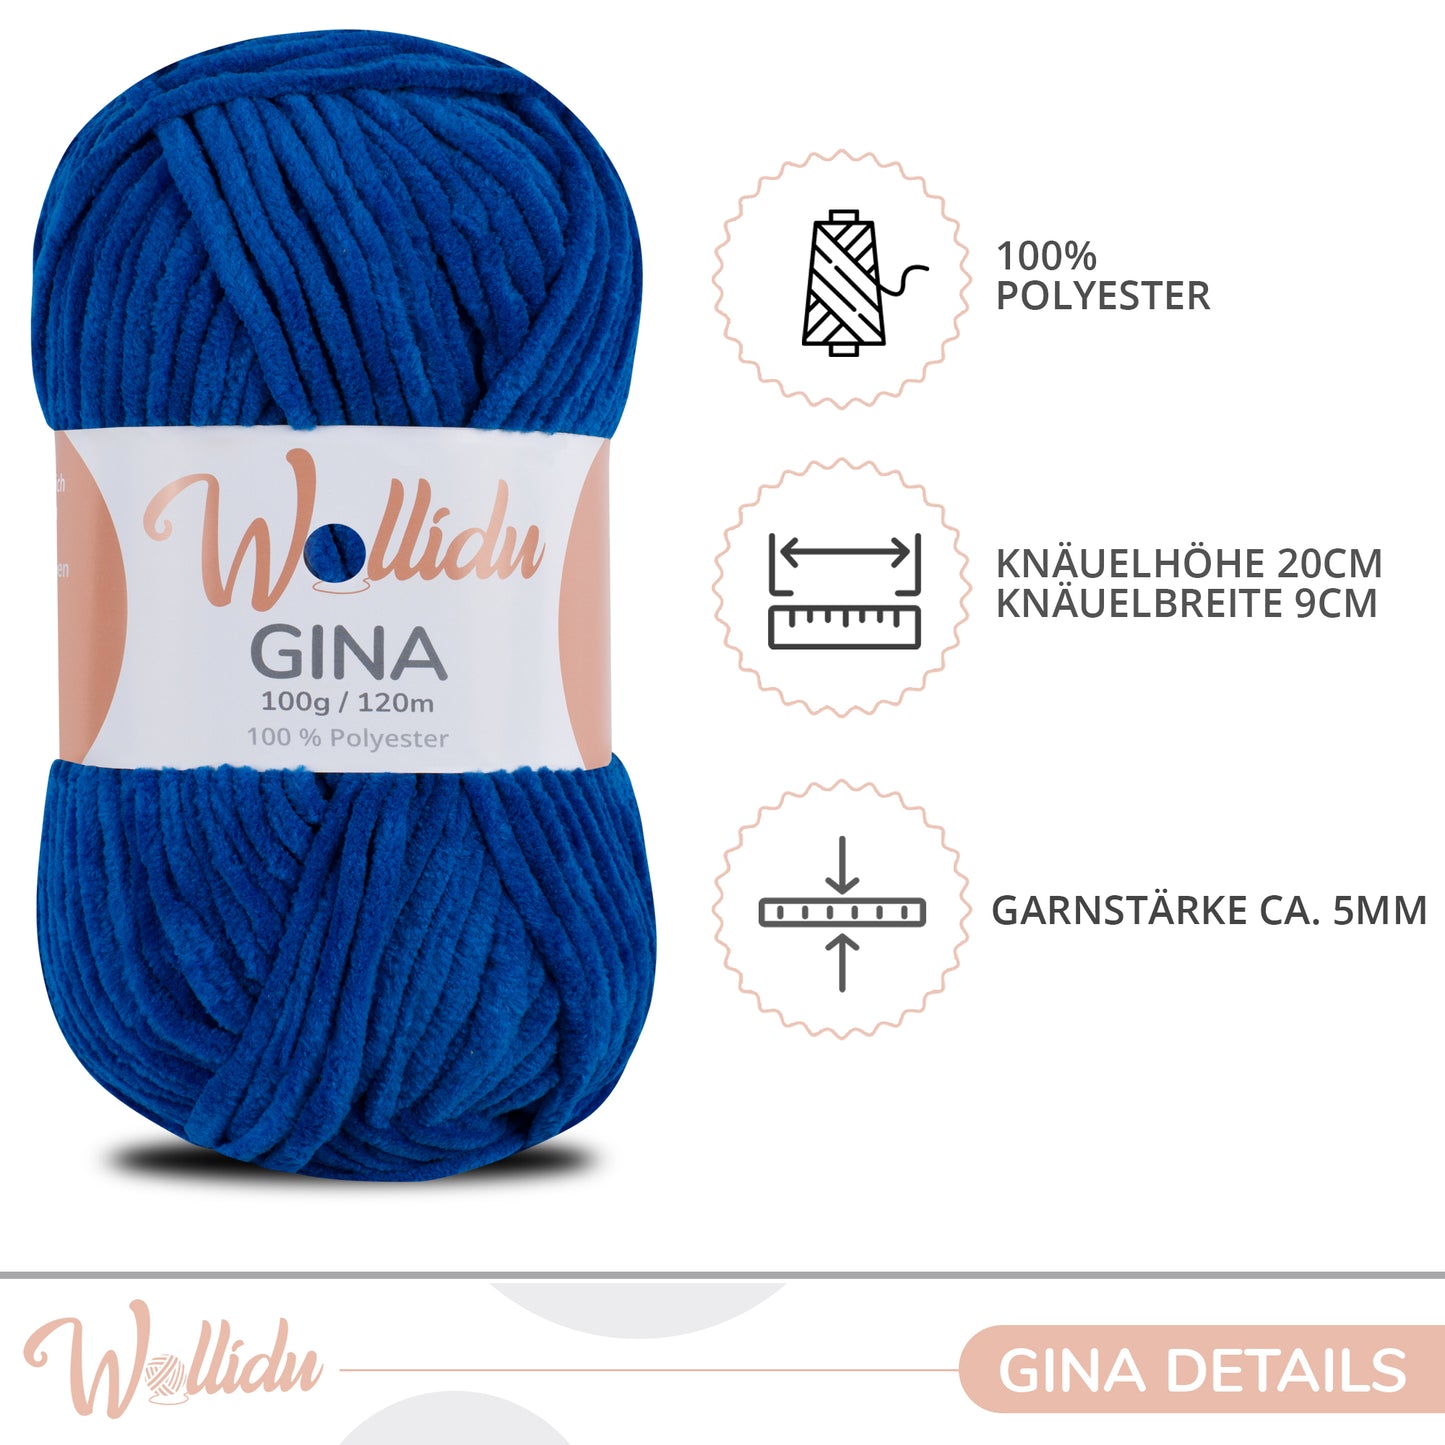 Wollidu Gina 100% Polyester 5 x 100g/120m - Dunkelblau